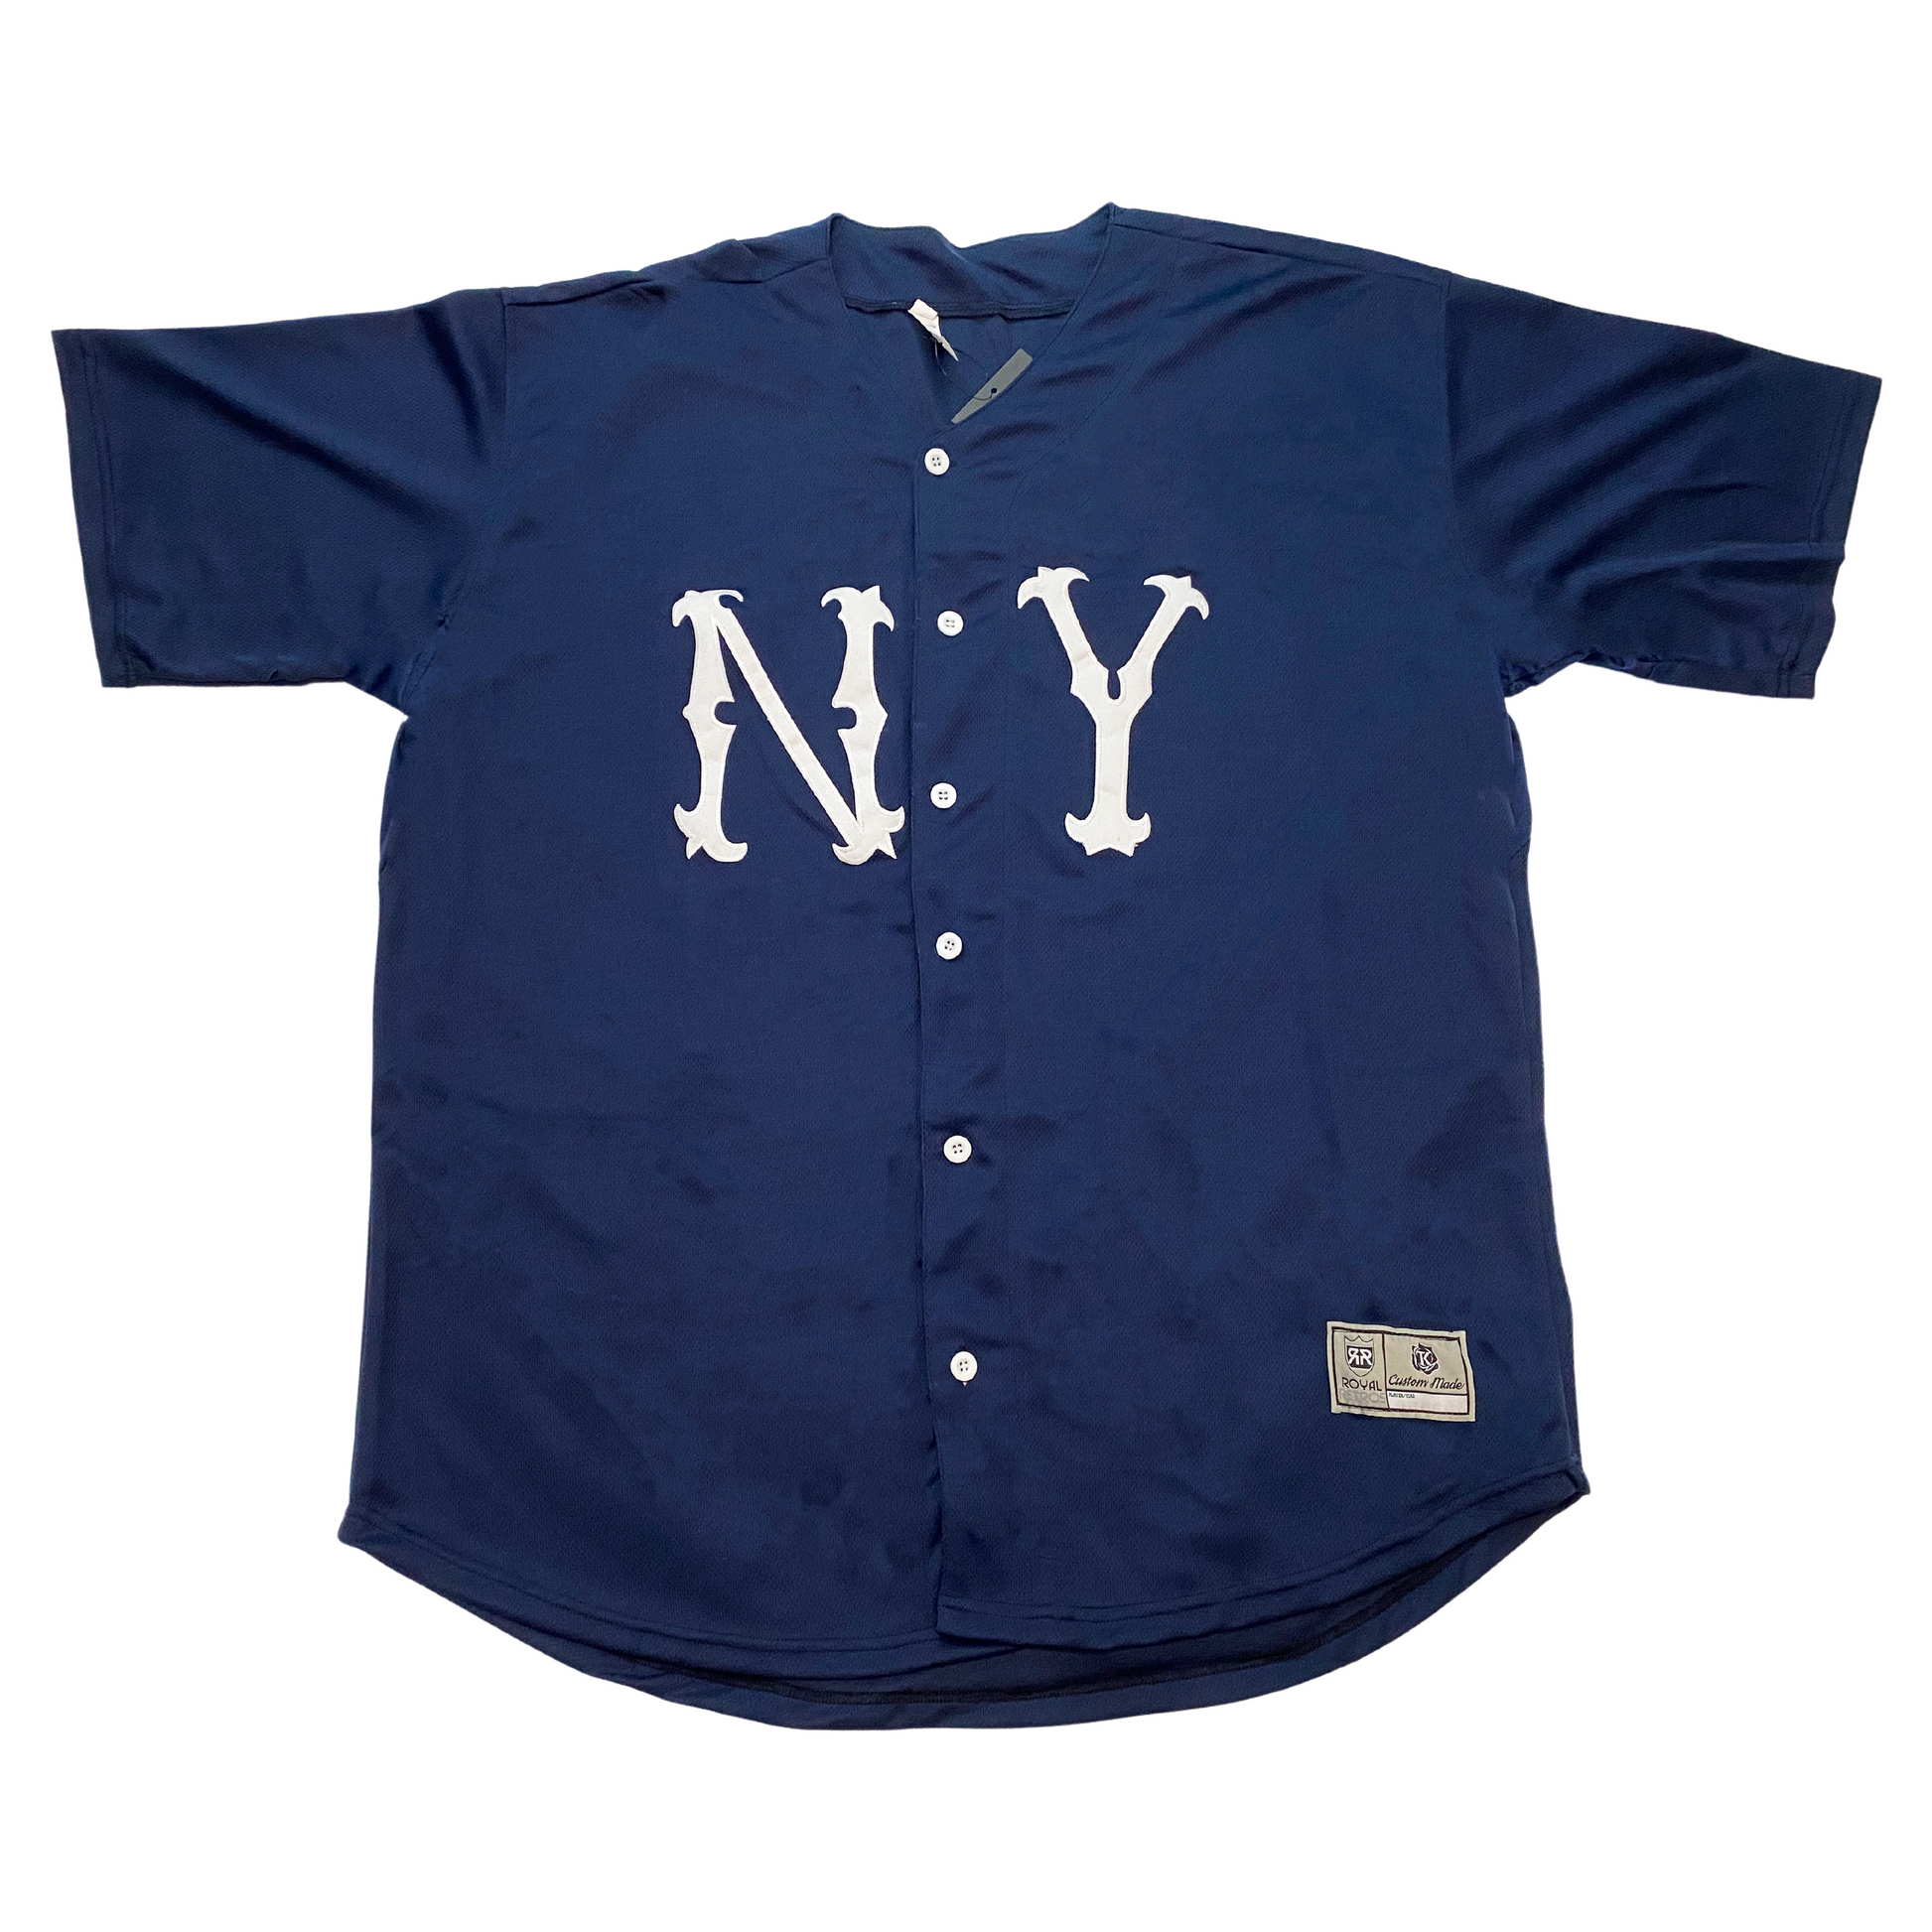 New York Yankees Uniform Today Spain, SAVE 53